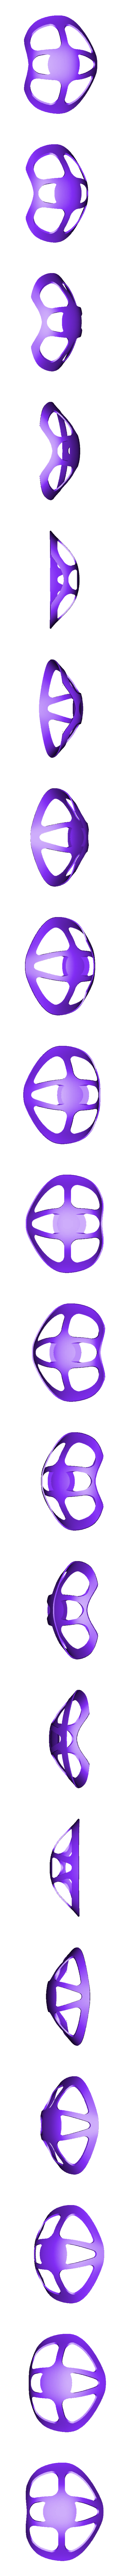 maskbracket-v2.stl Download free STL file Facemask inner bracket • 3D printer model, OrnjCreate